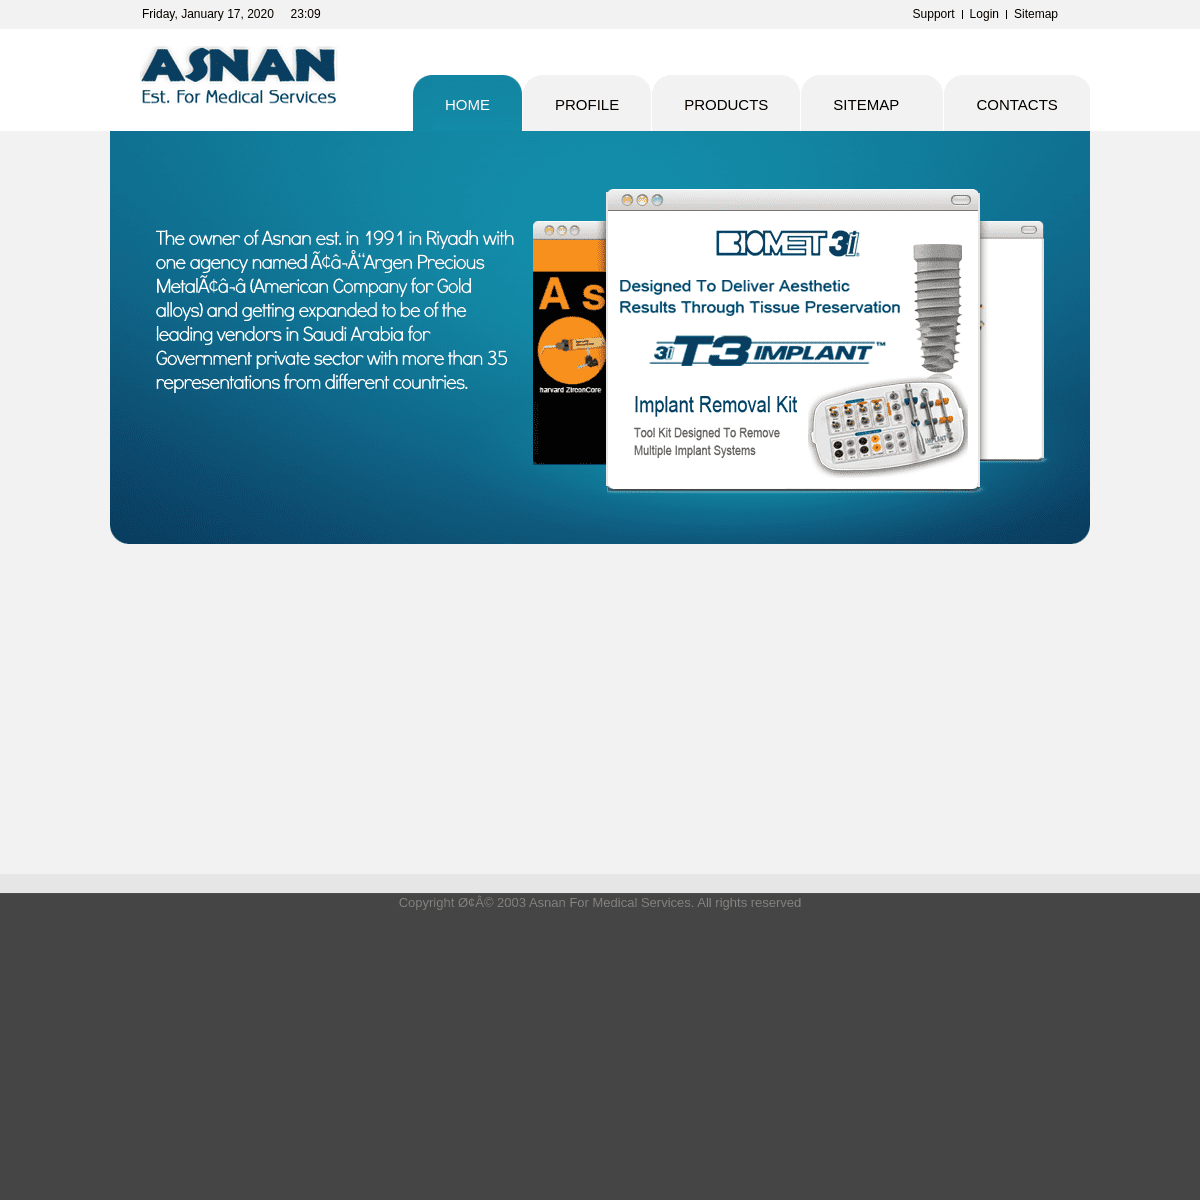 A complete backup of asnan.net.sa